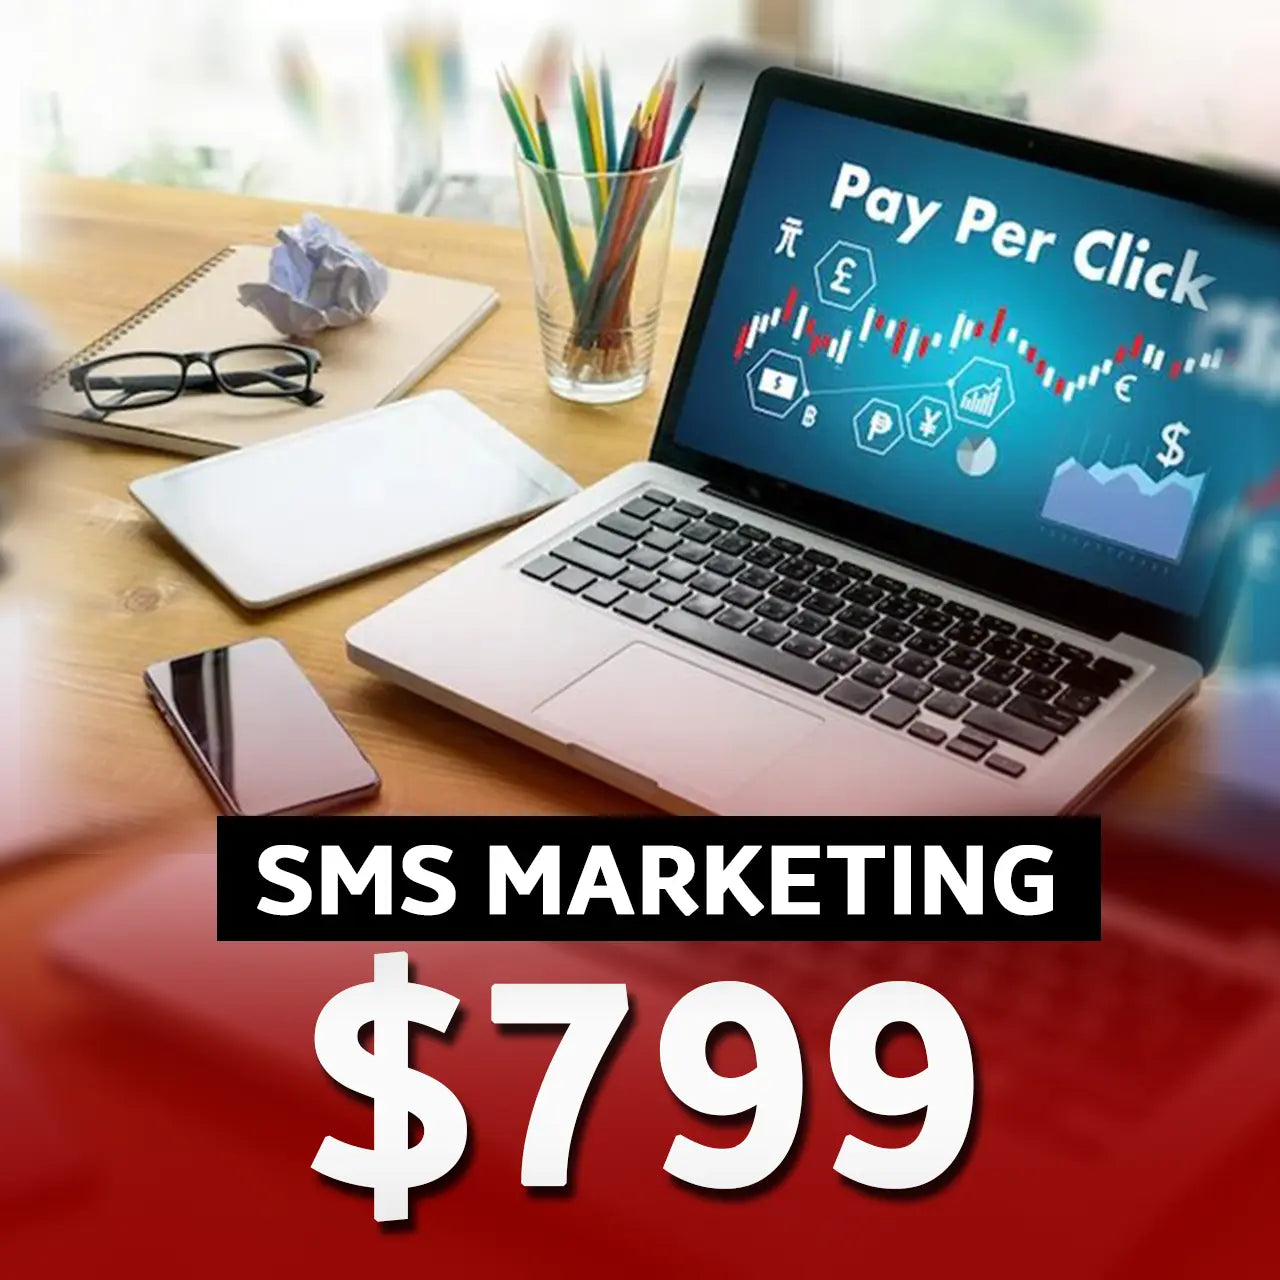 sms marketing-$799